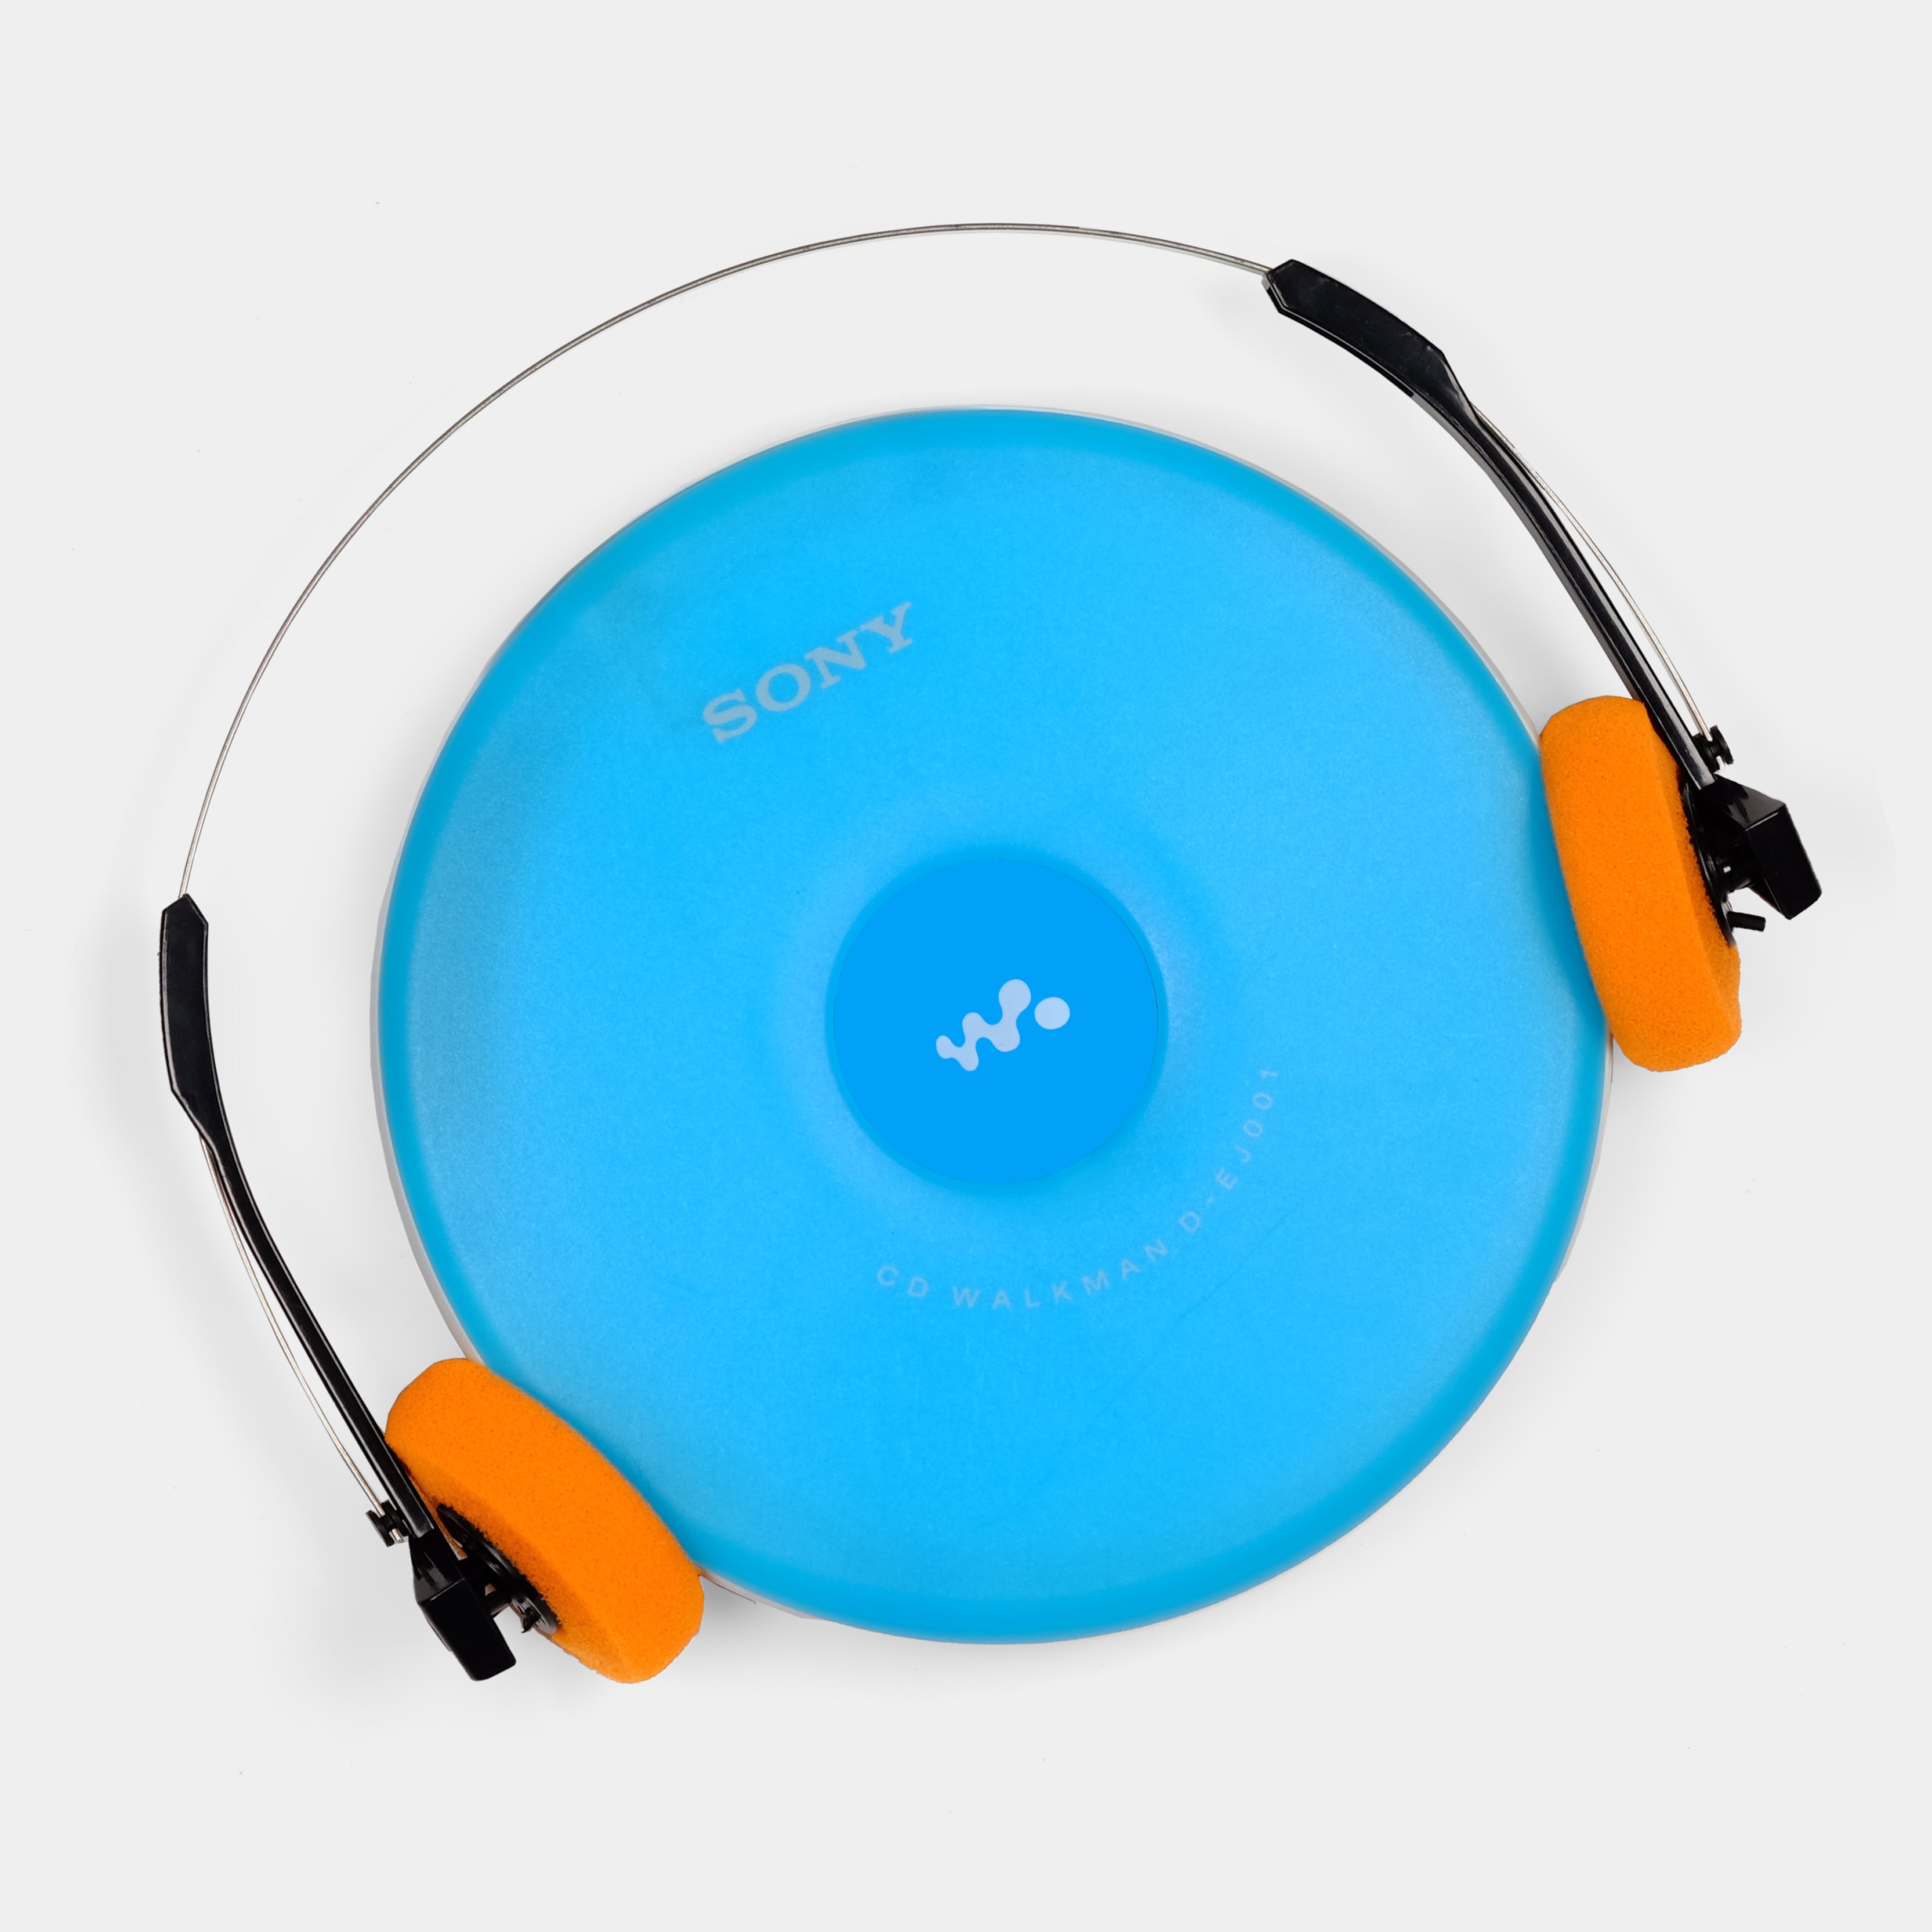 Sony Walkman D-EJ001 Blue Portable CD Player